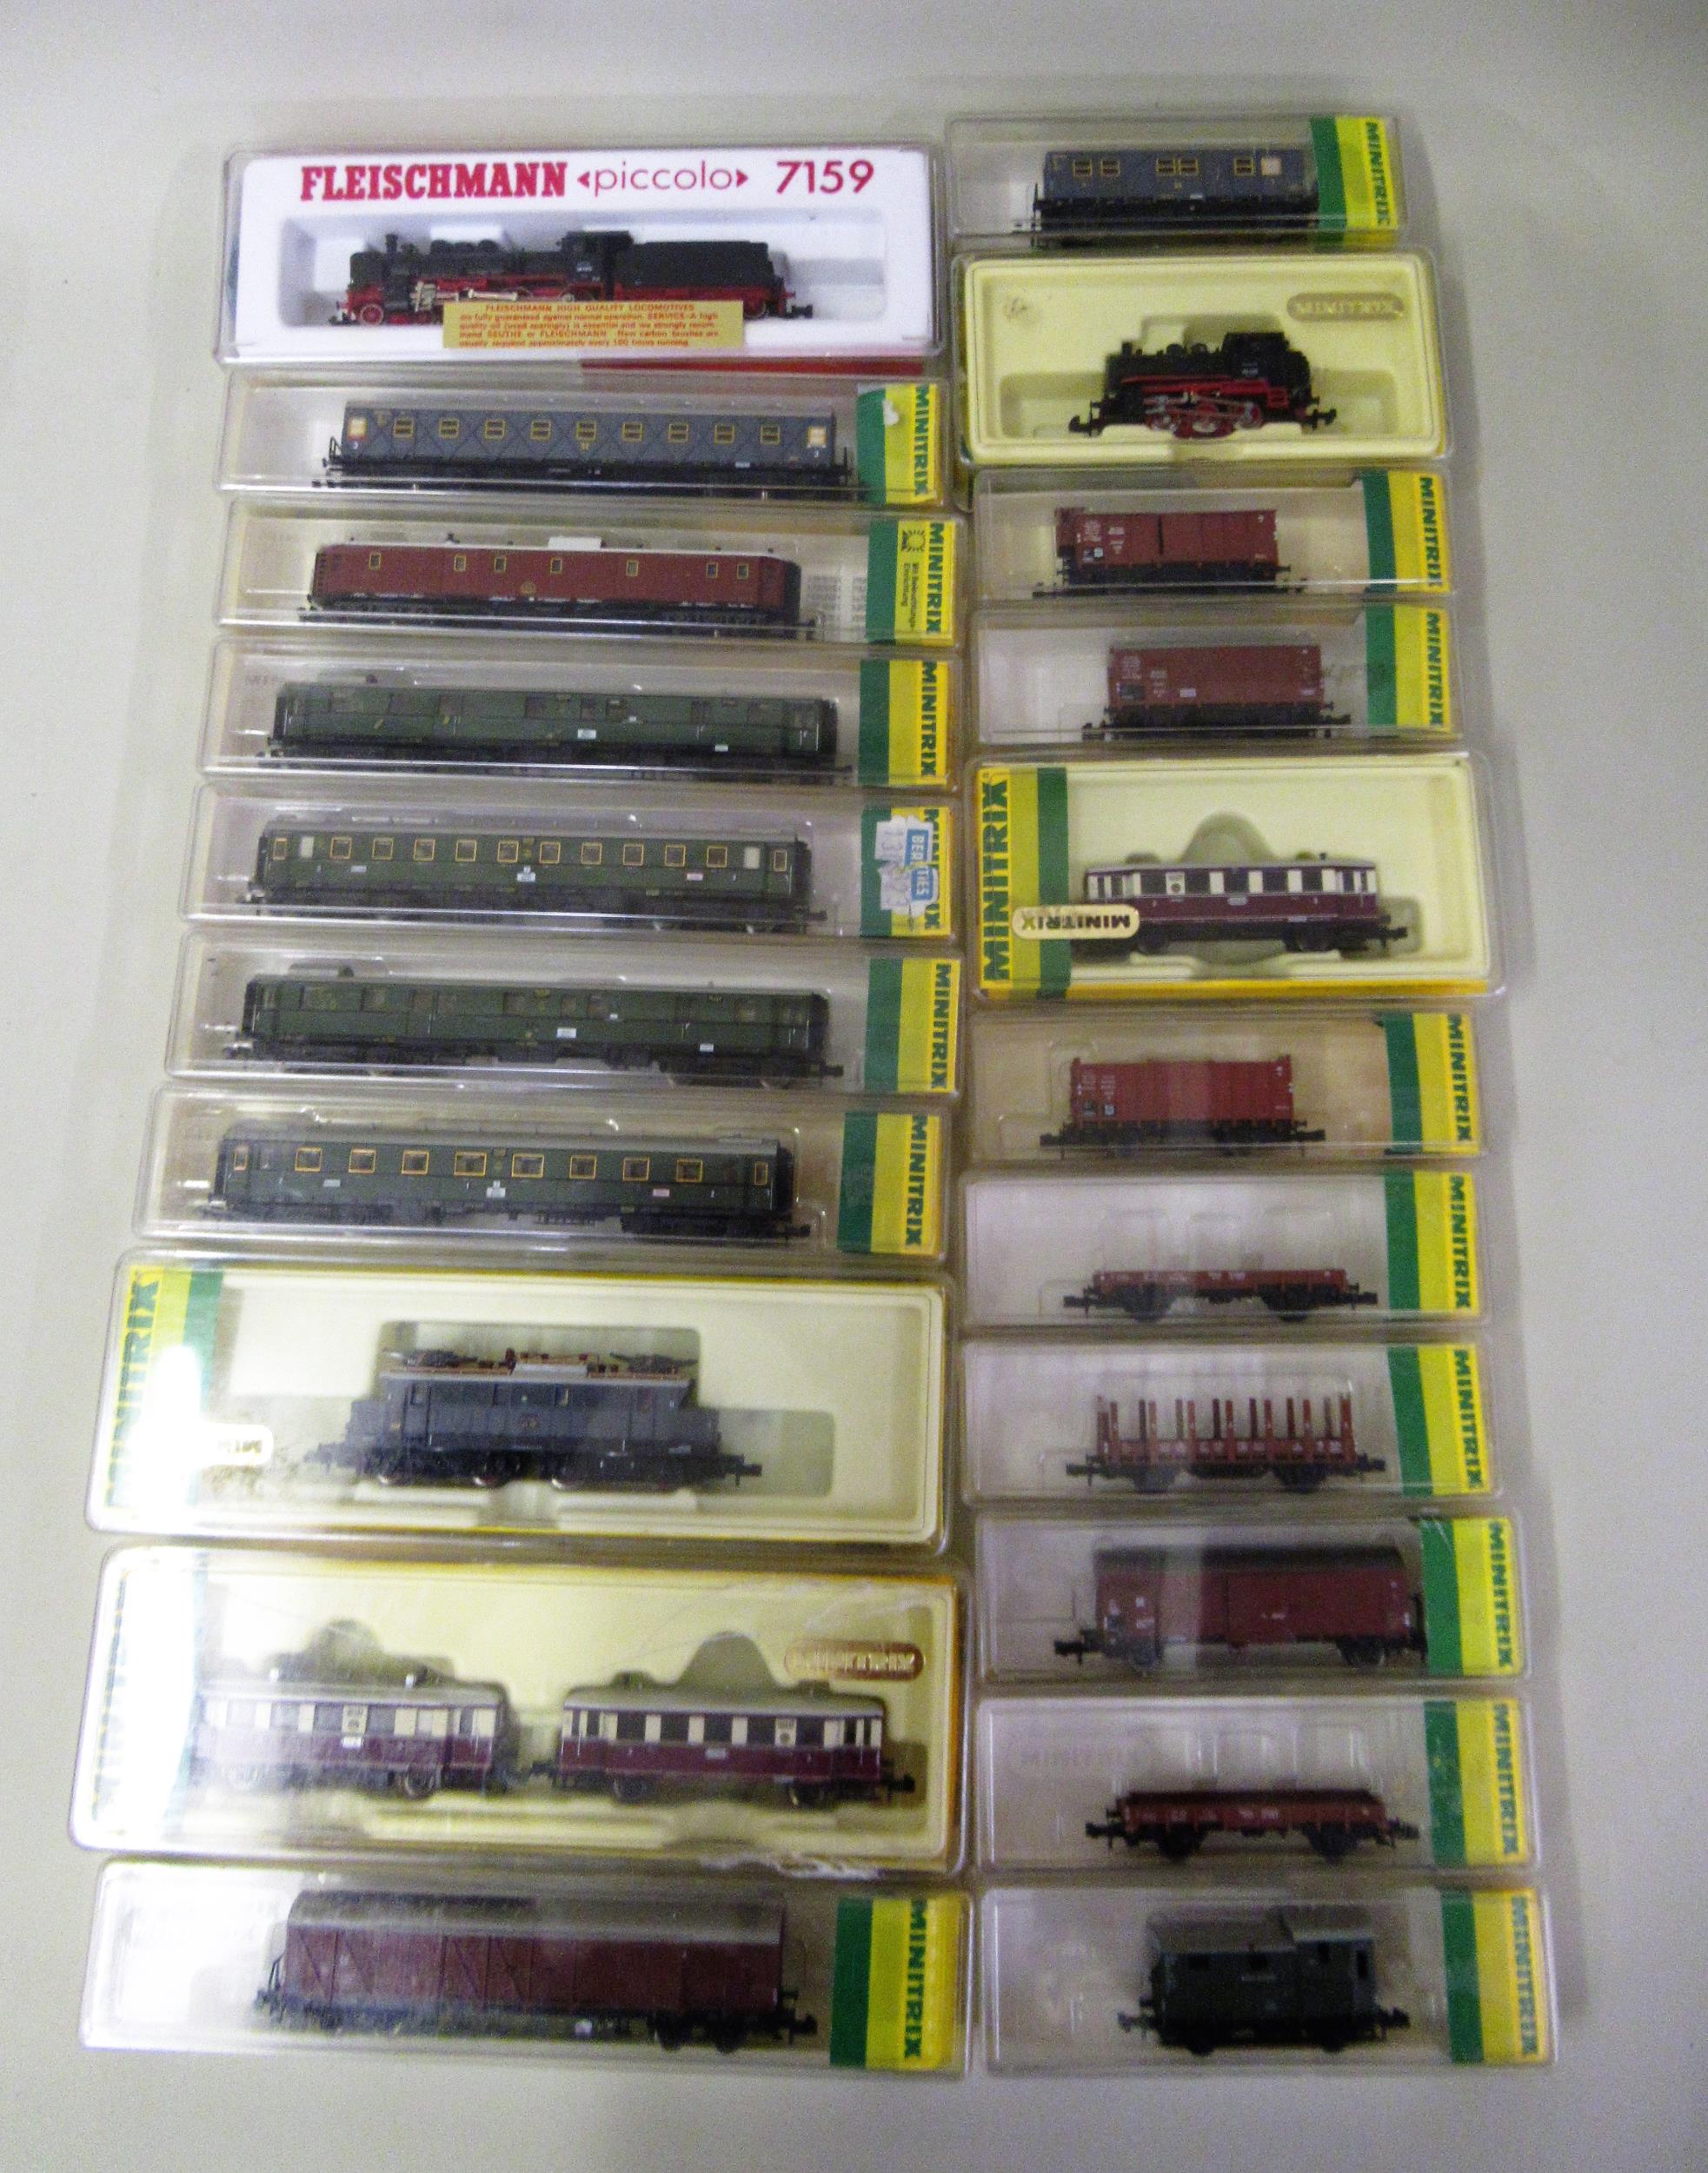 Quantity of ' N ' gauge model railway including locomotives by Minitrix & Fleischmann, together with